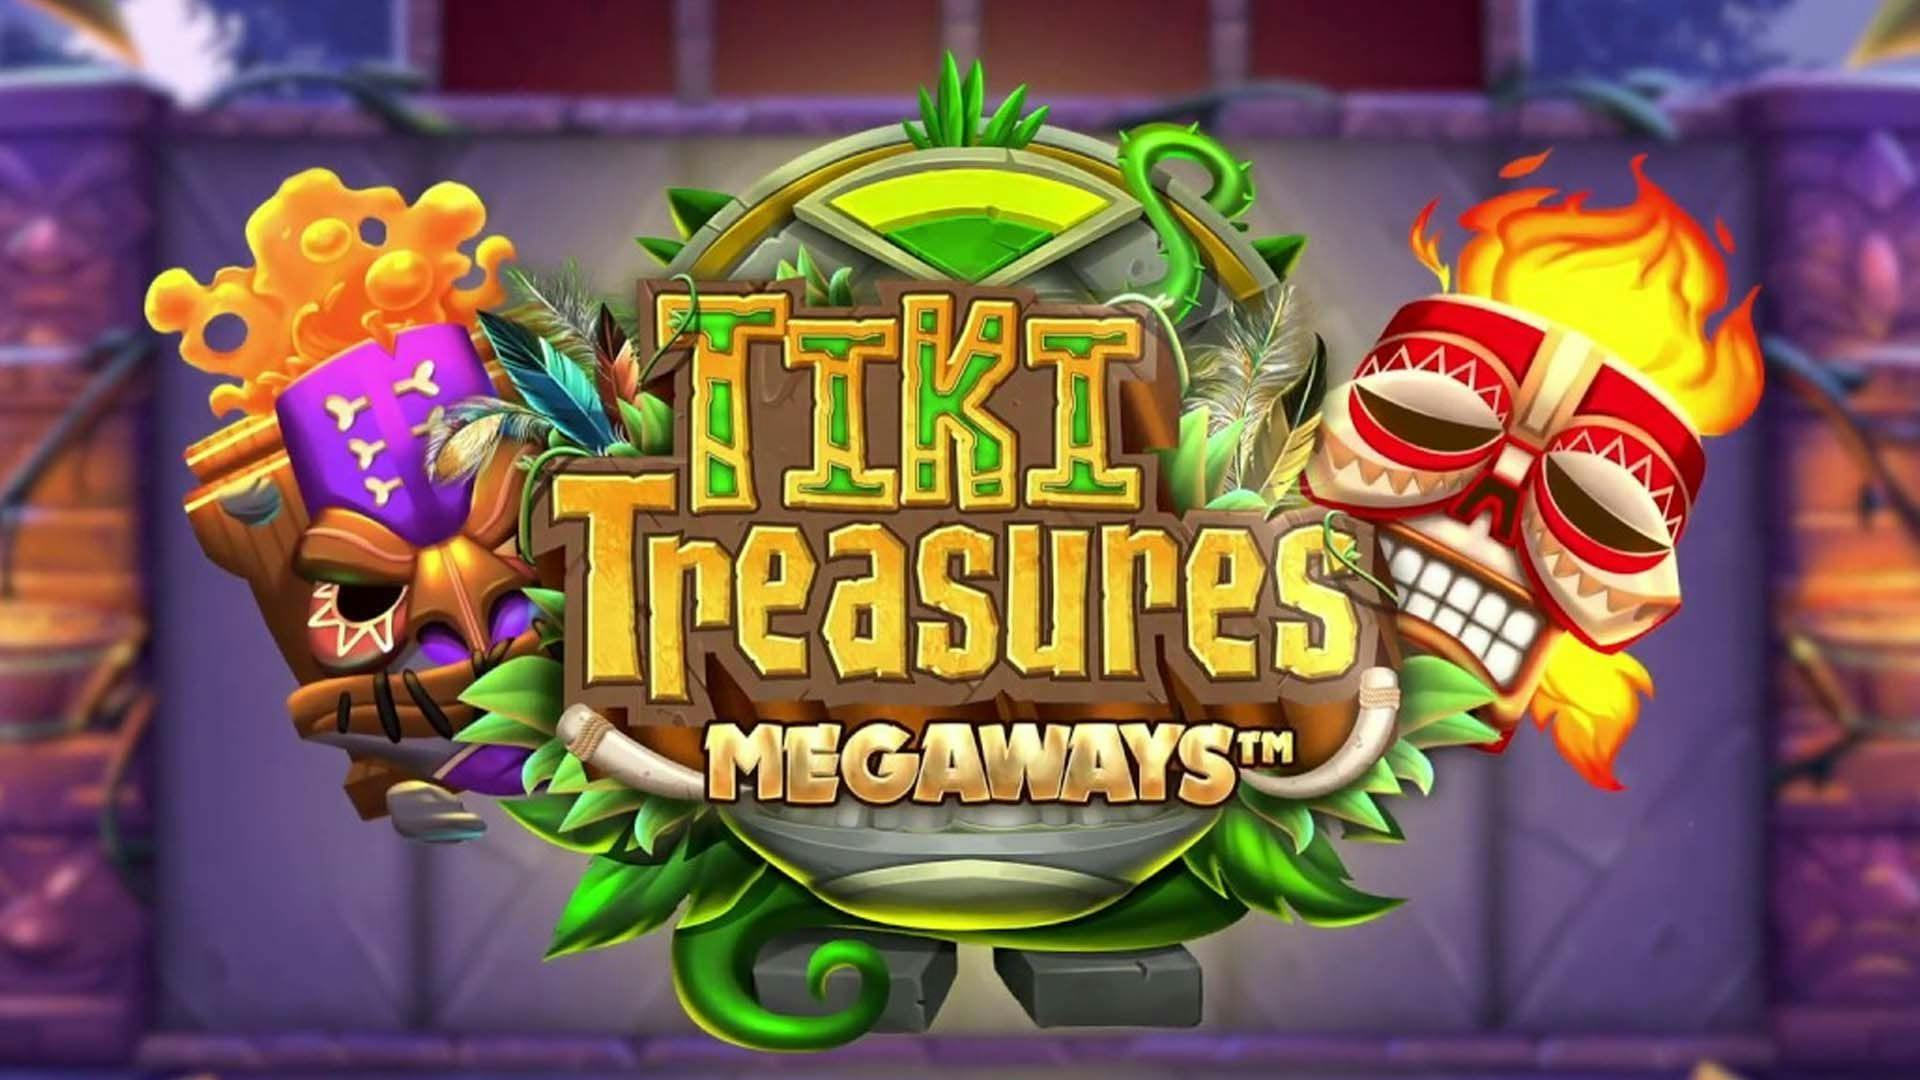 Tiki Treasures Megaways Slot Online Free Demo